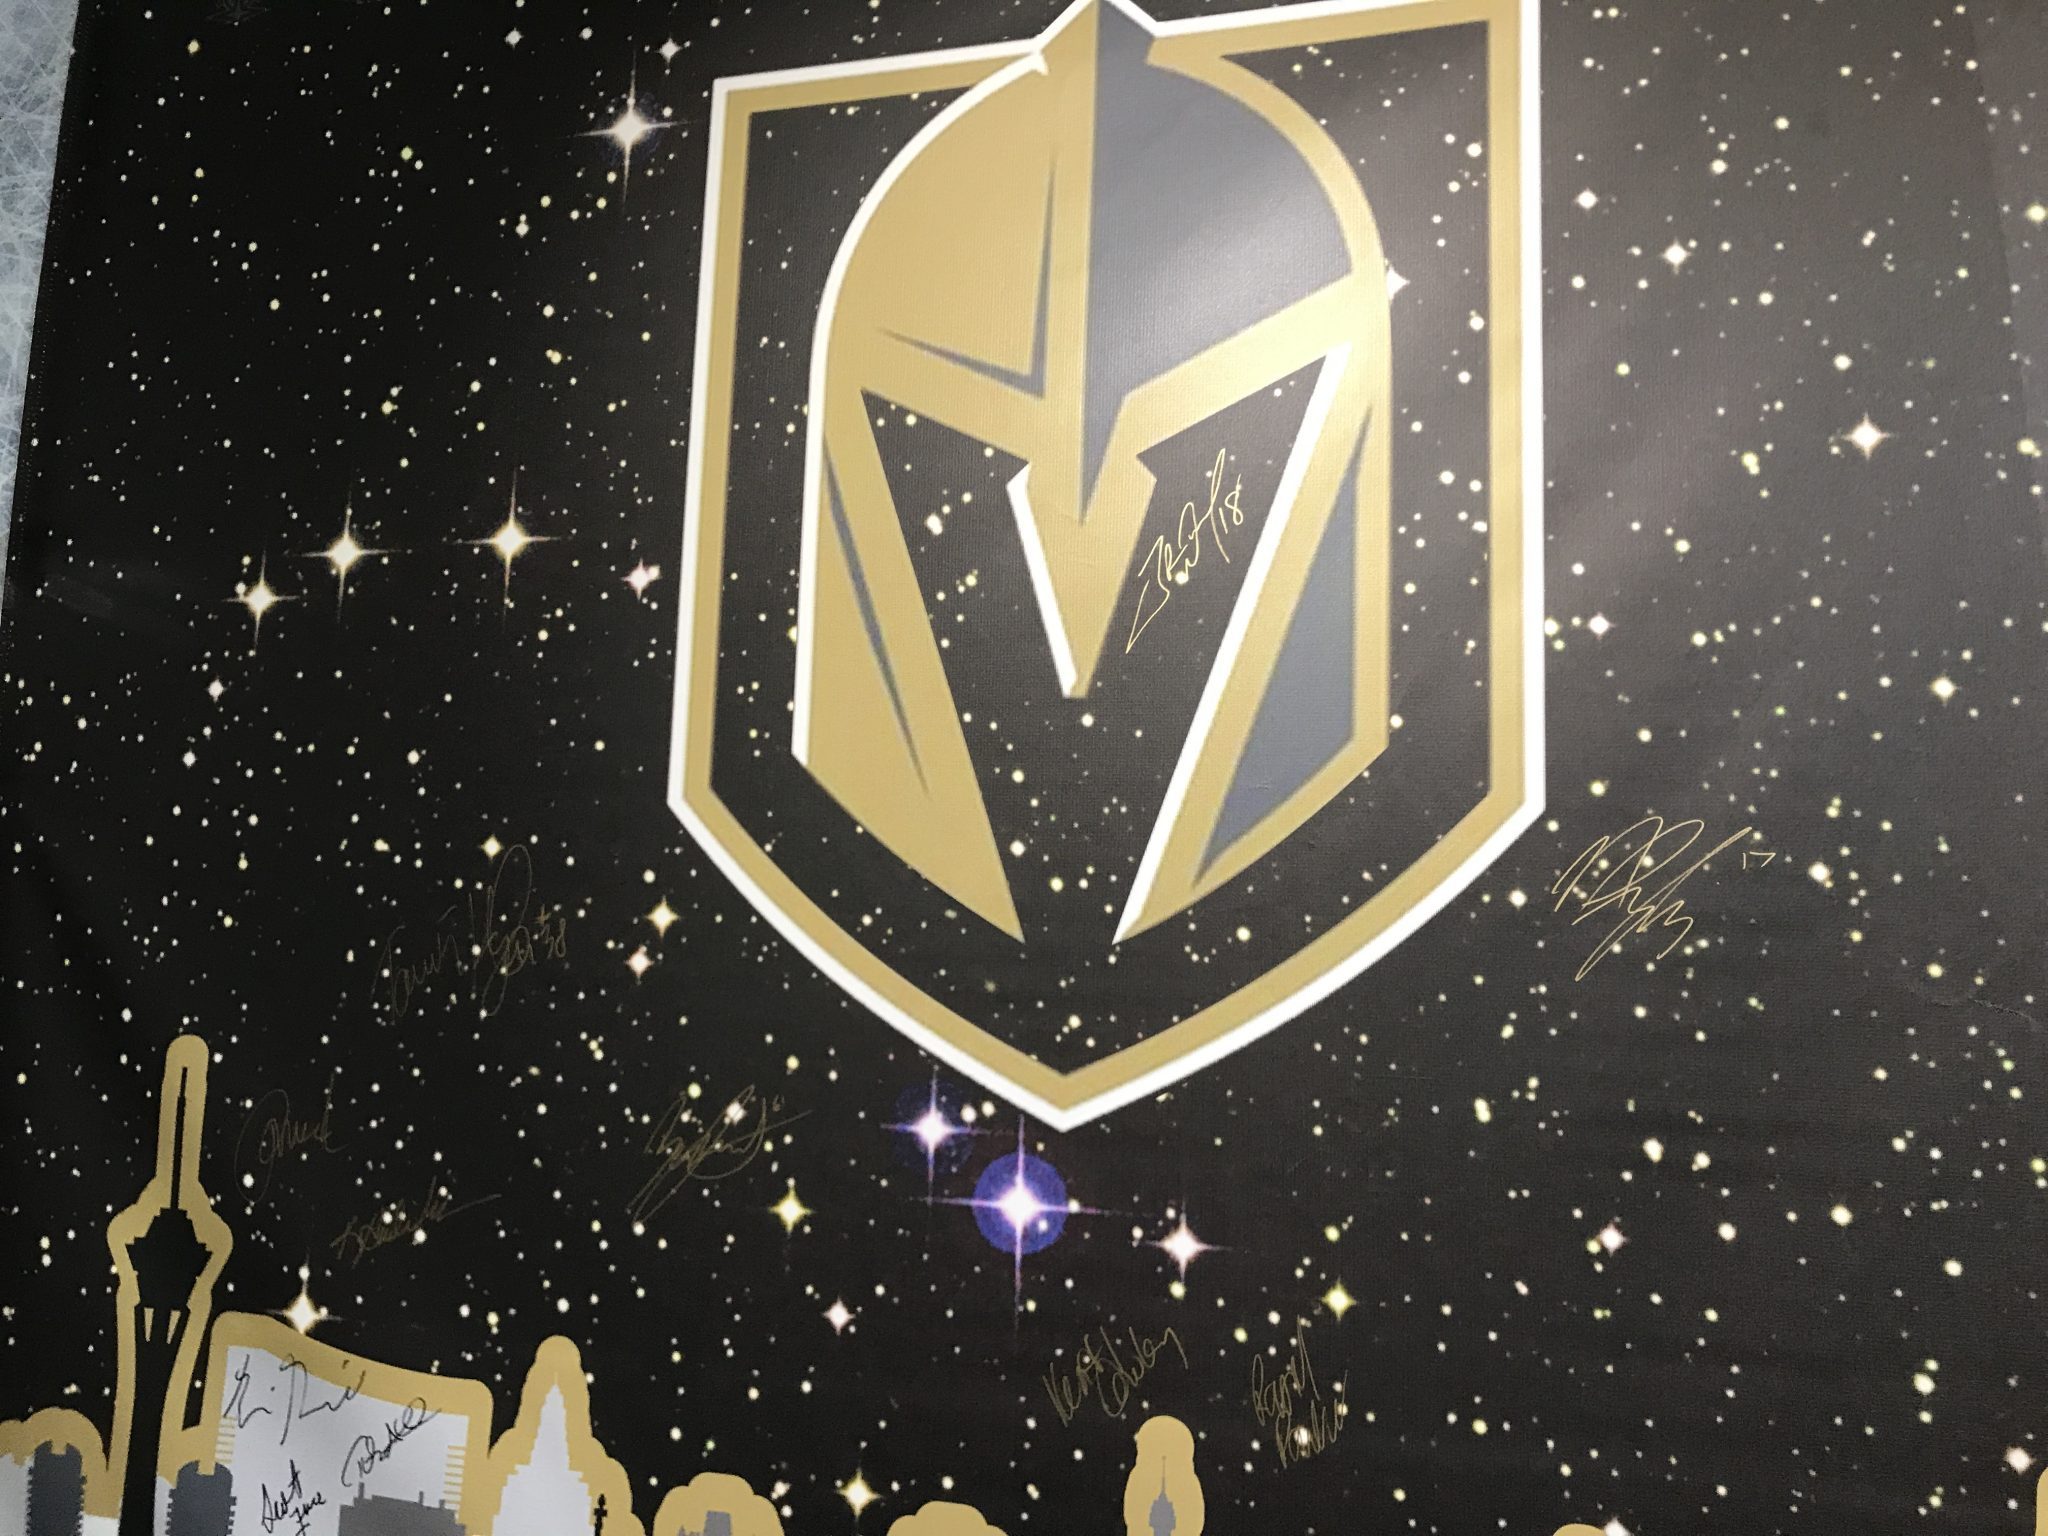 Sports Vegas Golden Knights 4k Ultra HD Wallpaper